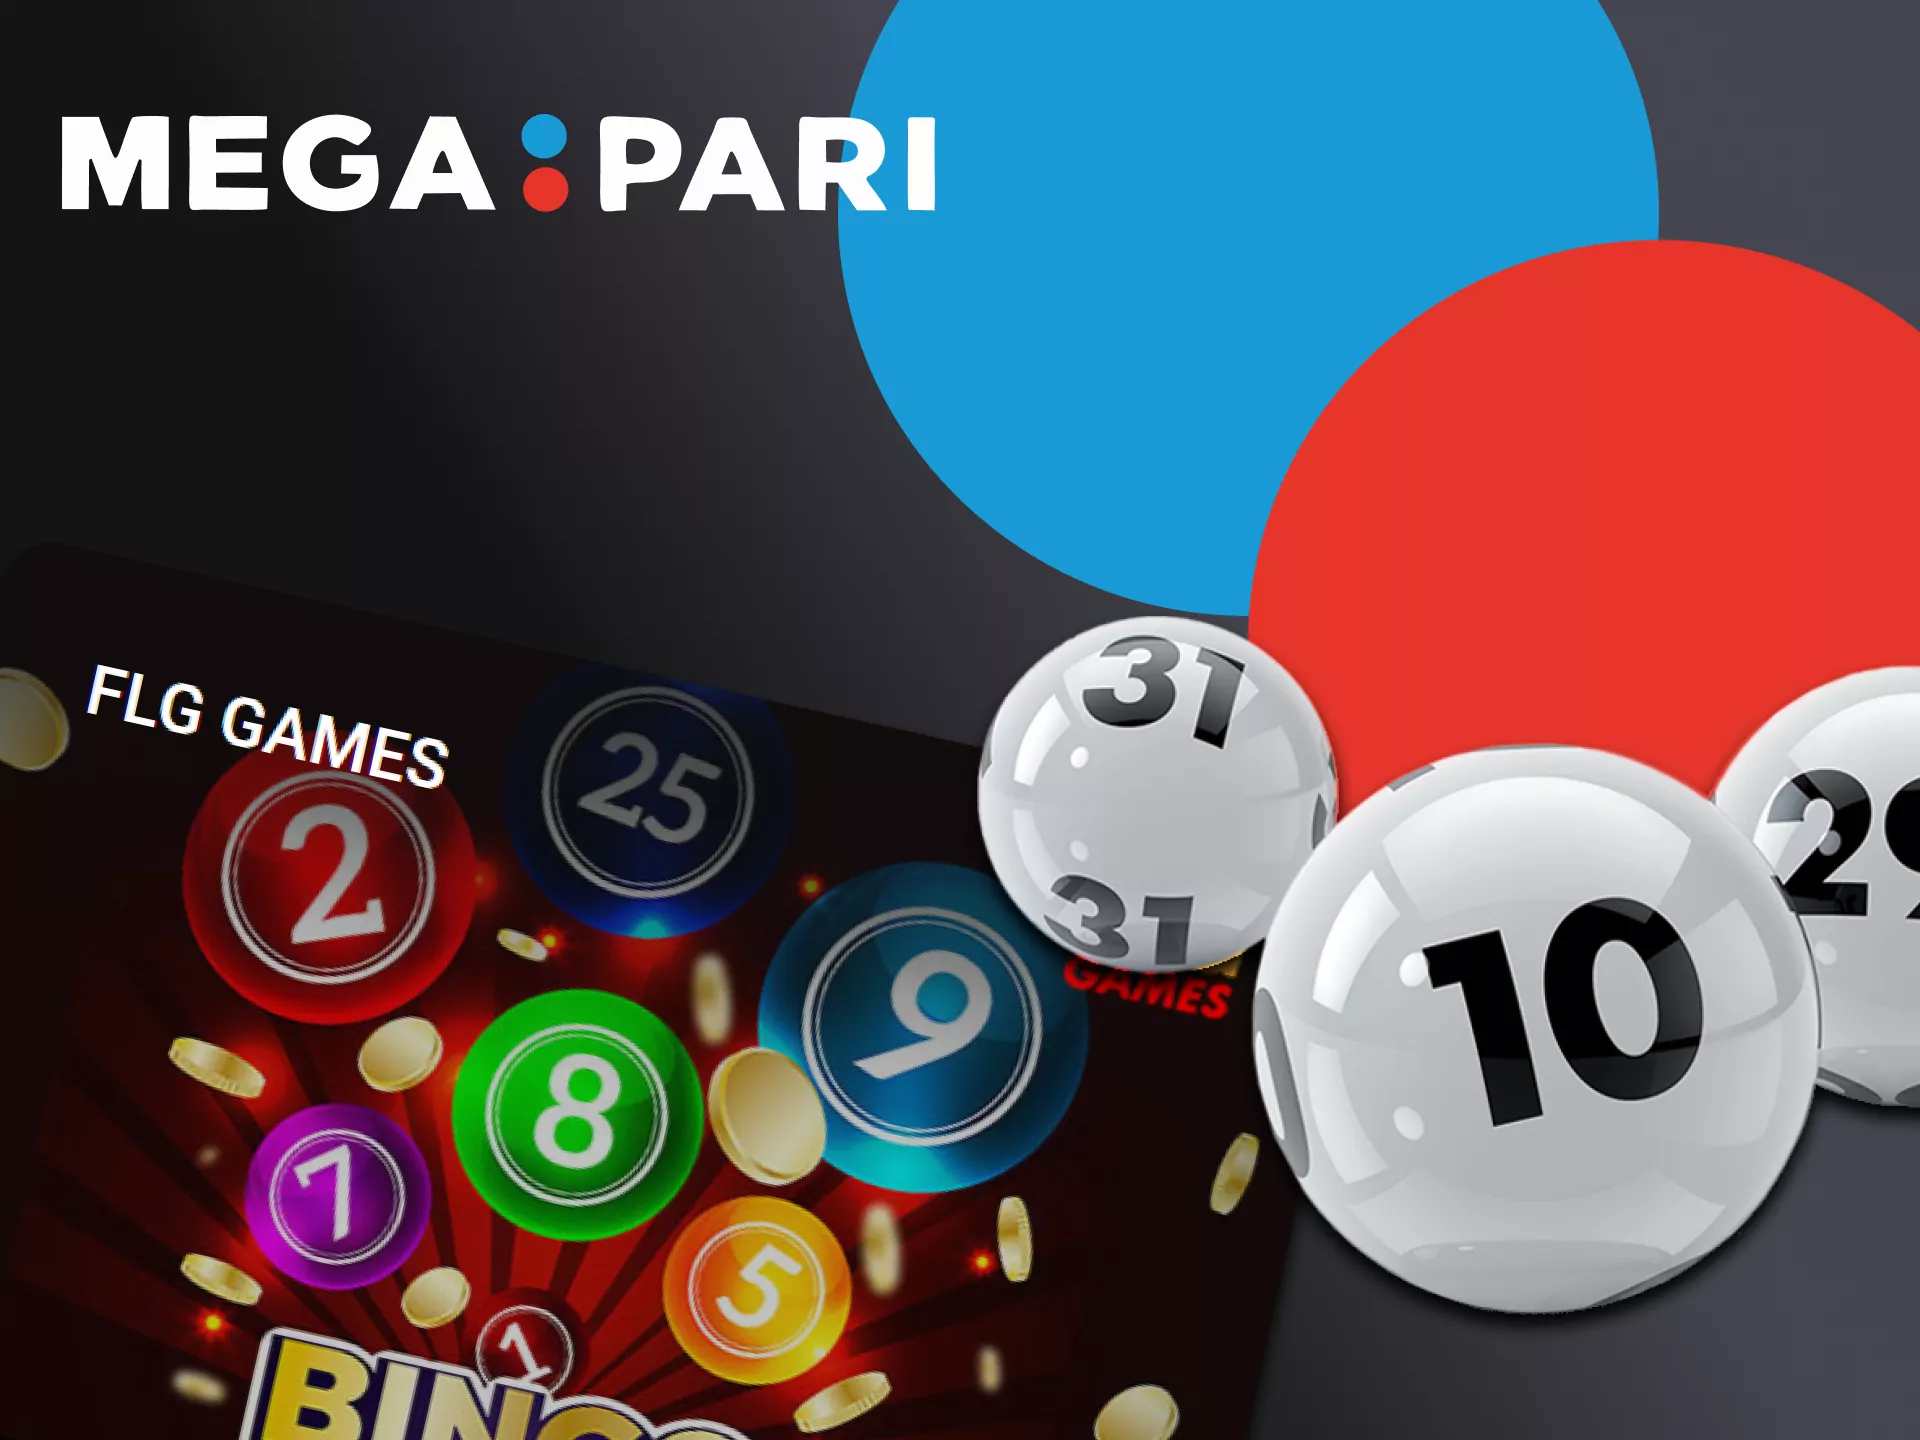 Learn the rules of bingo on Megapari.